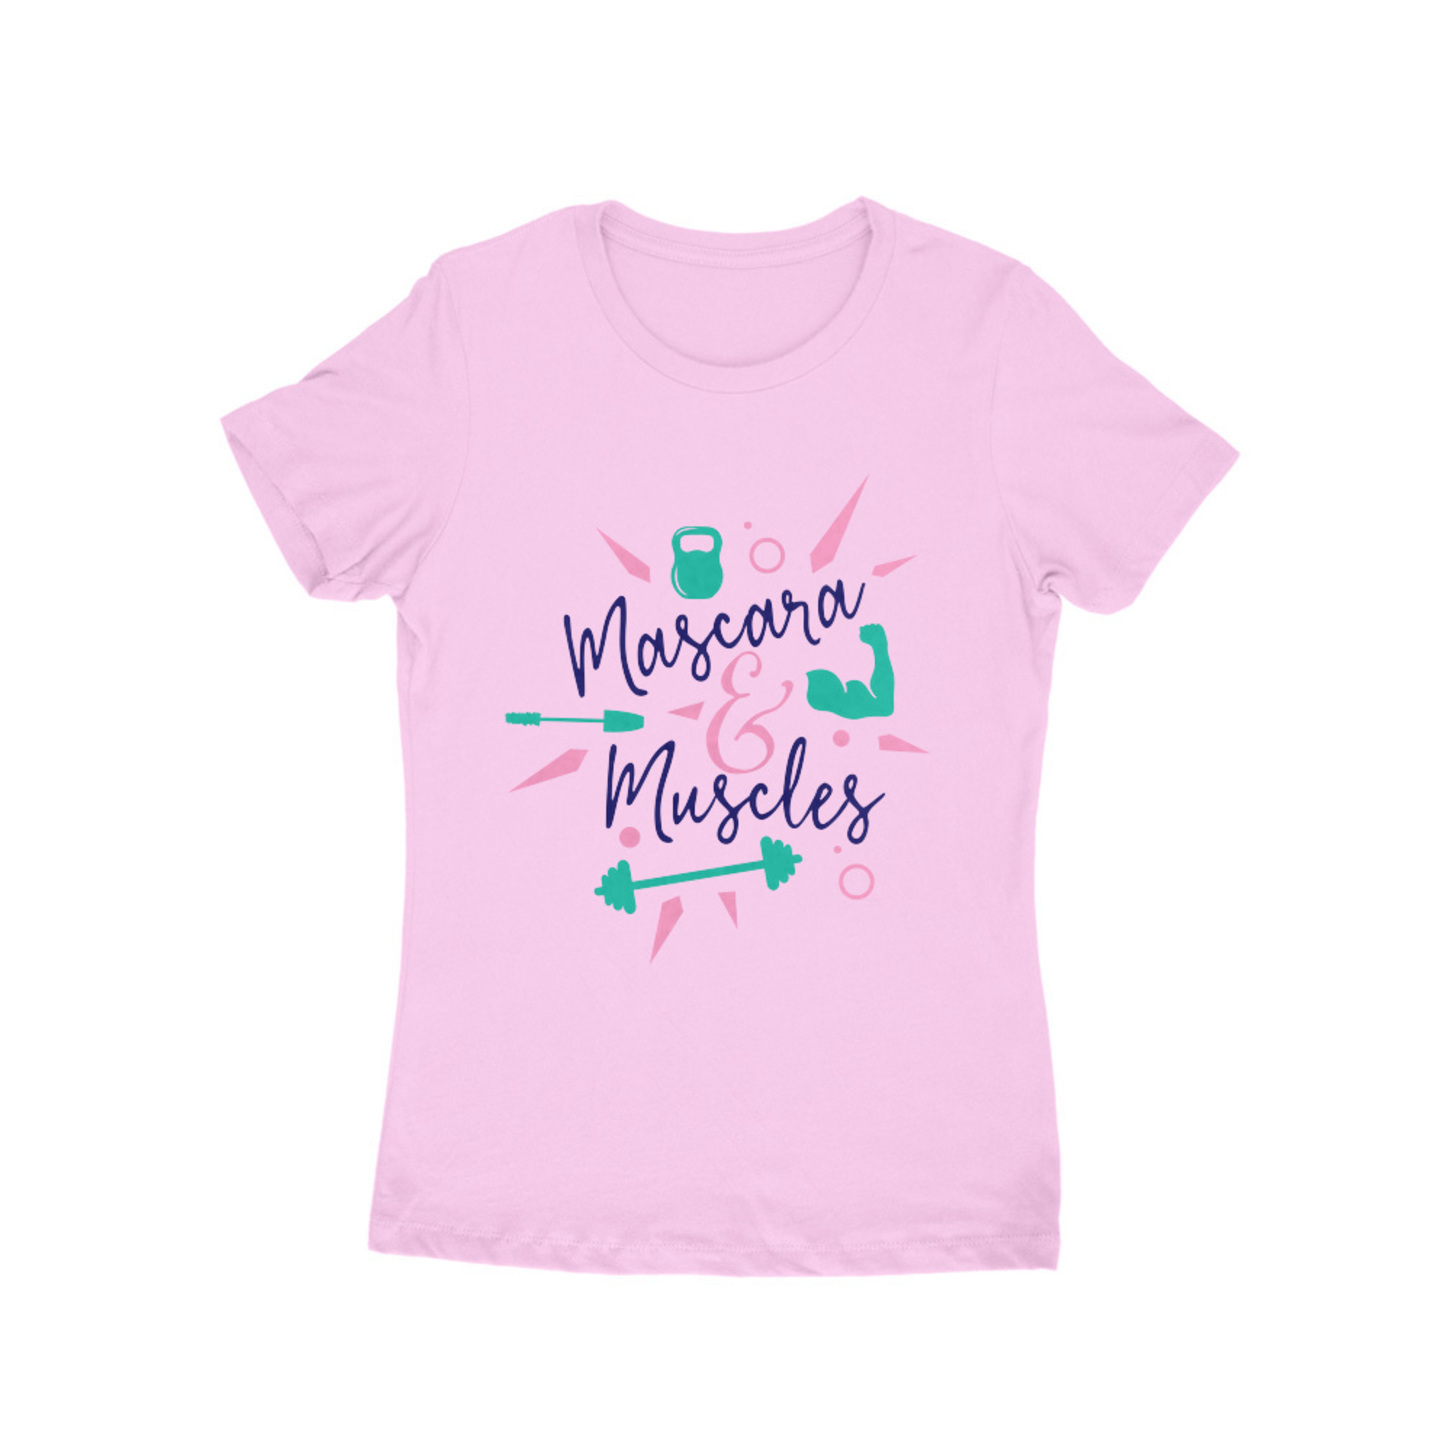 Mascara & Muscle Printed T-Shirt for Women